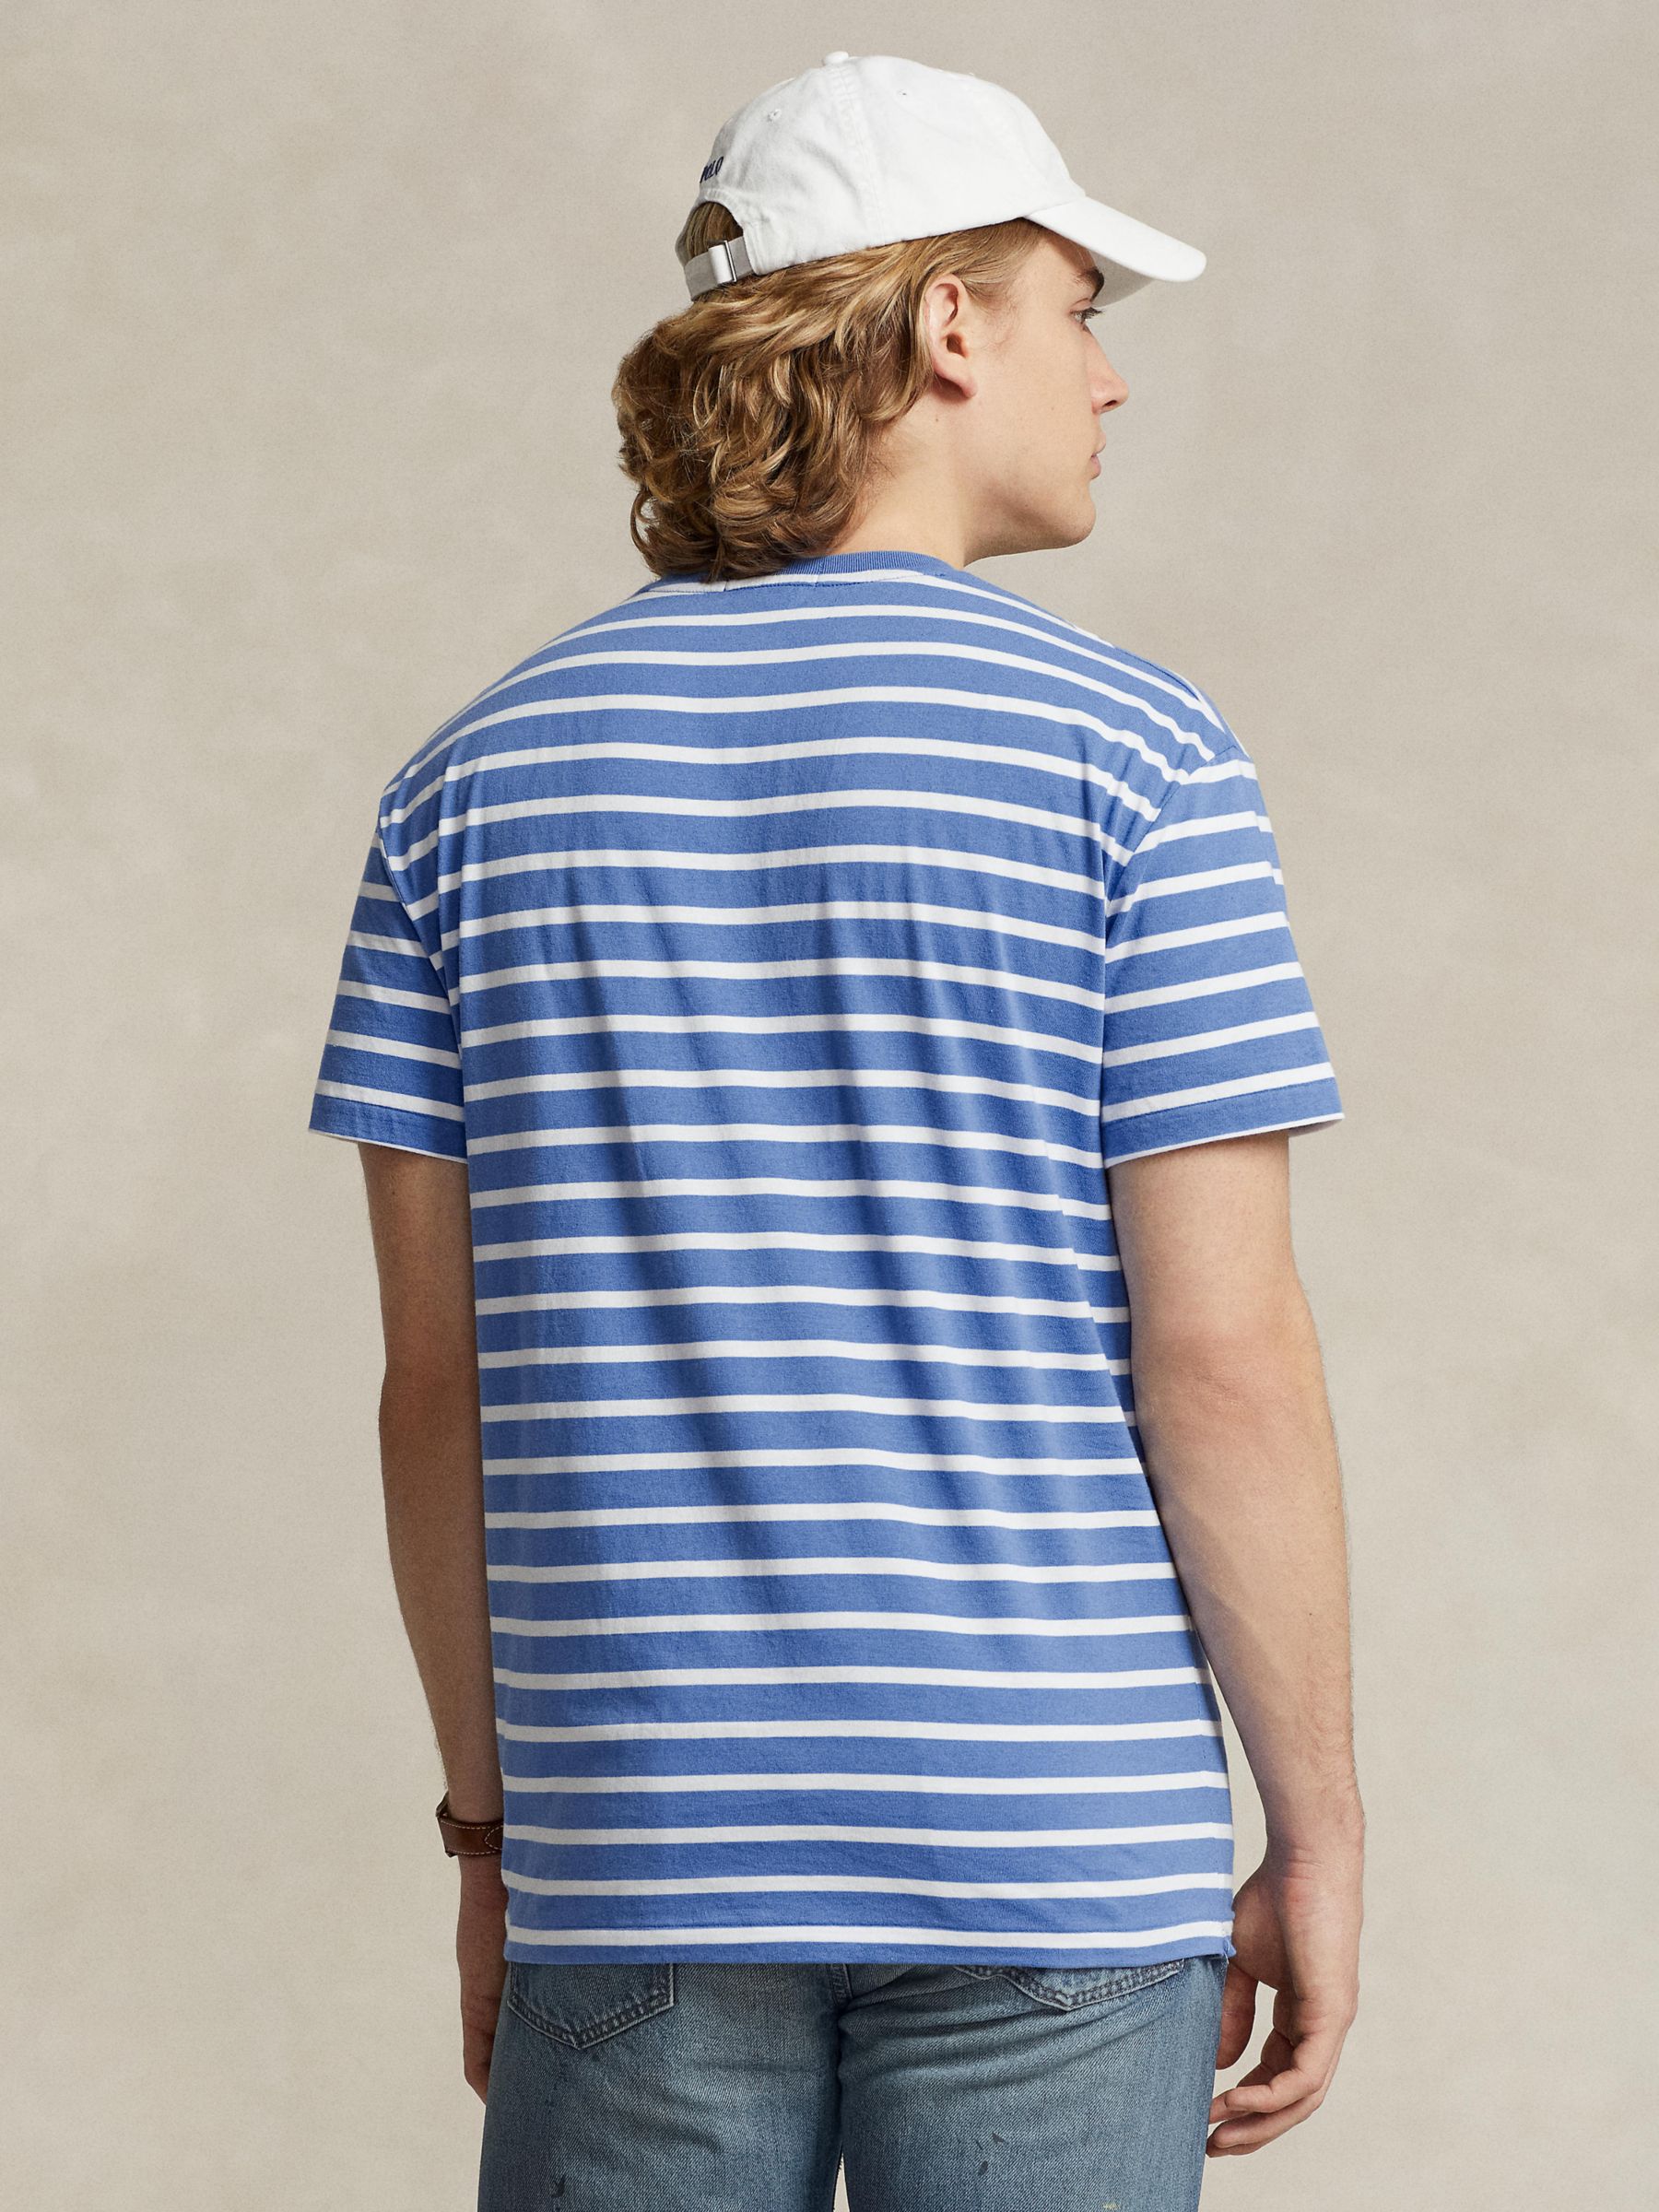 Ralph Lauren Striped Cotton T-Shirt, Blue/White, S